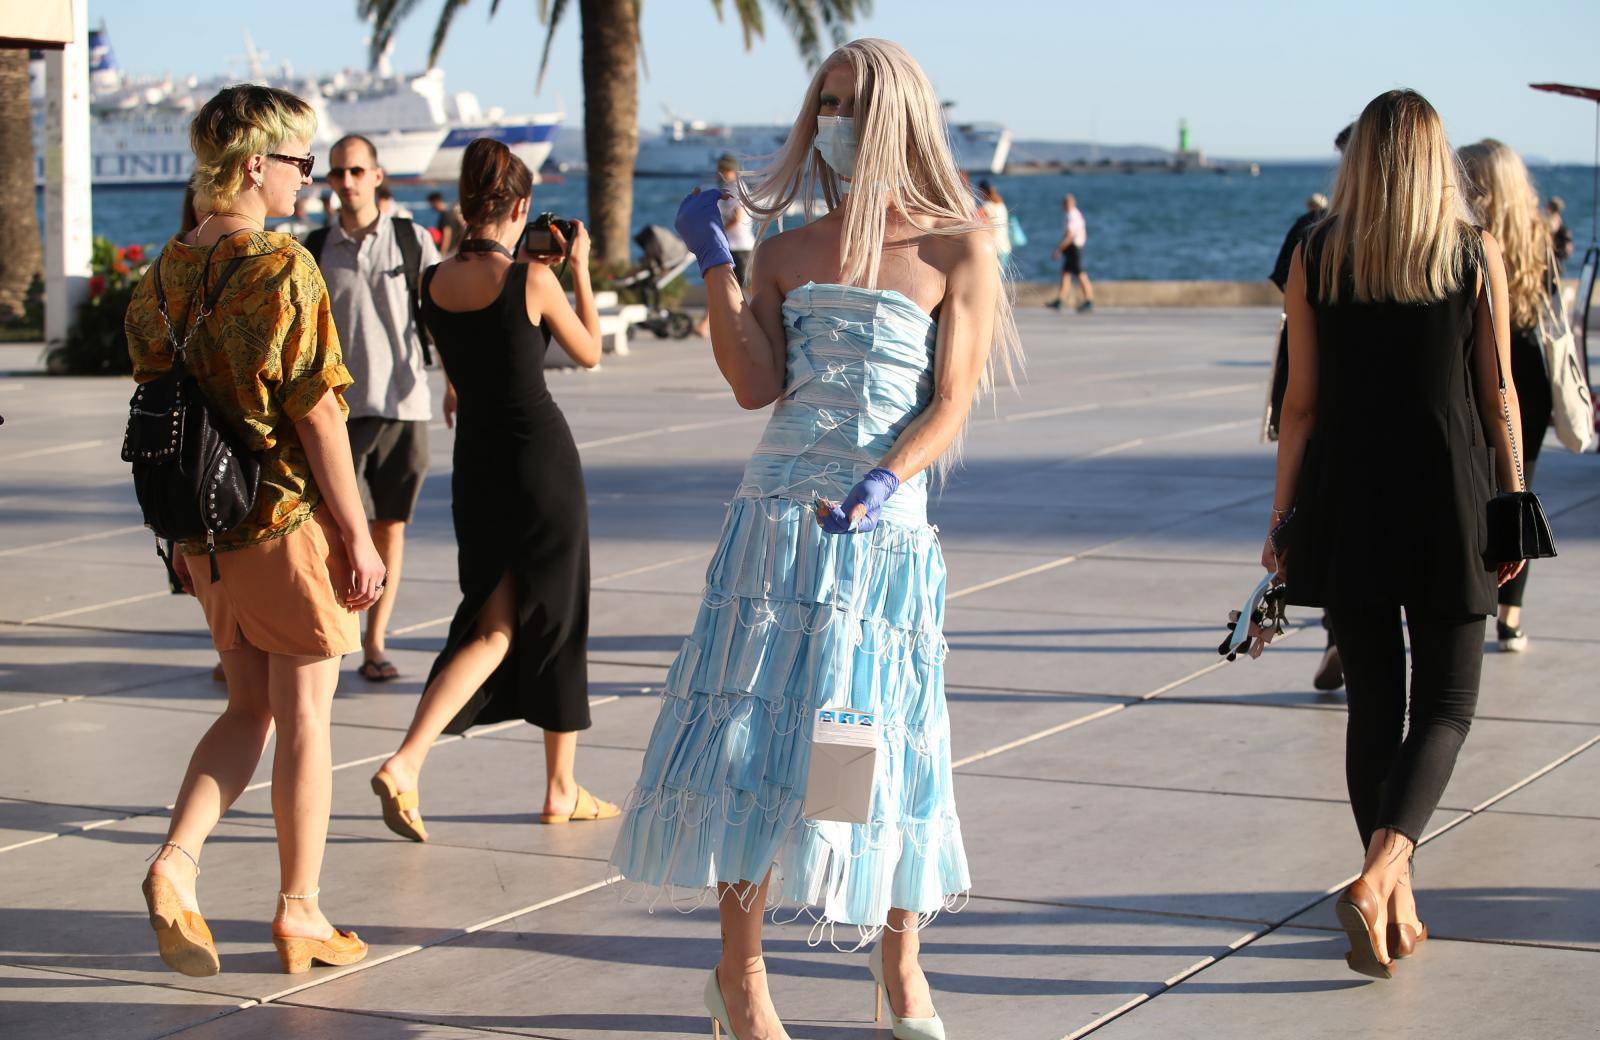 Prvi 'drag queen' u Splitu: Hod u štiklama sam danima vježbao